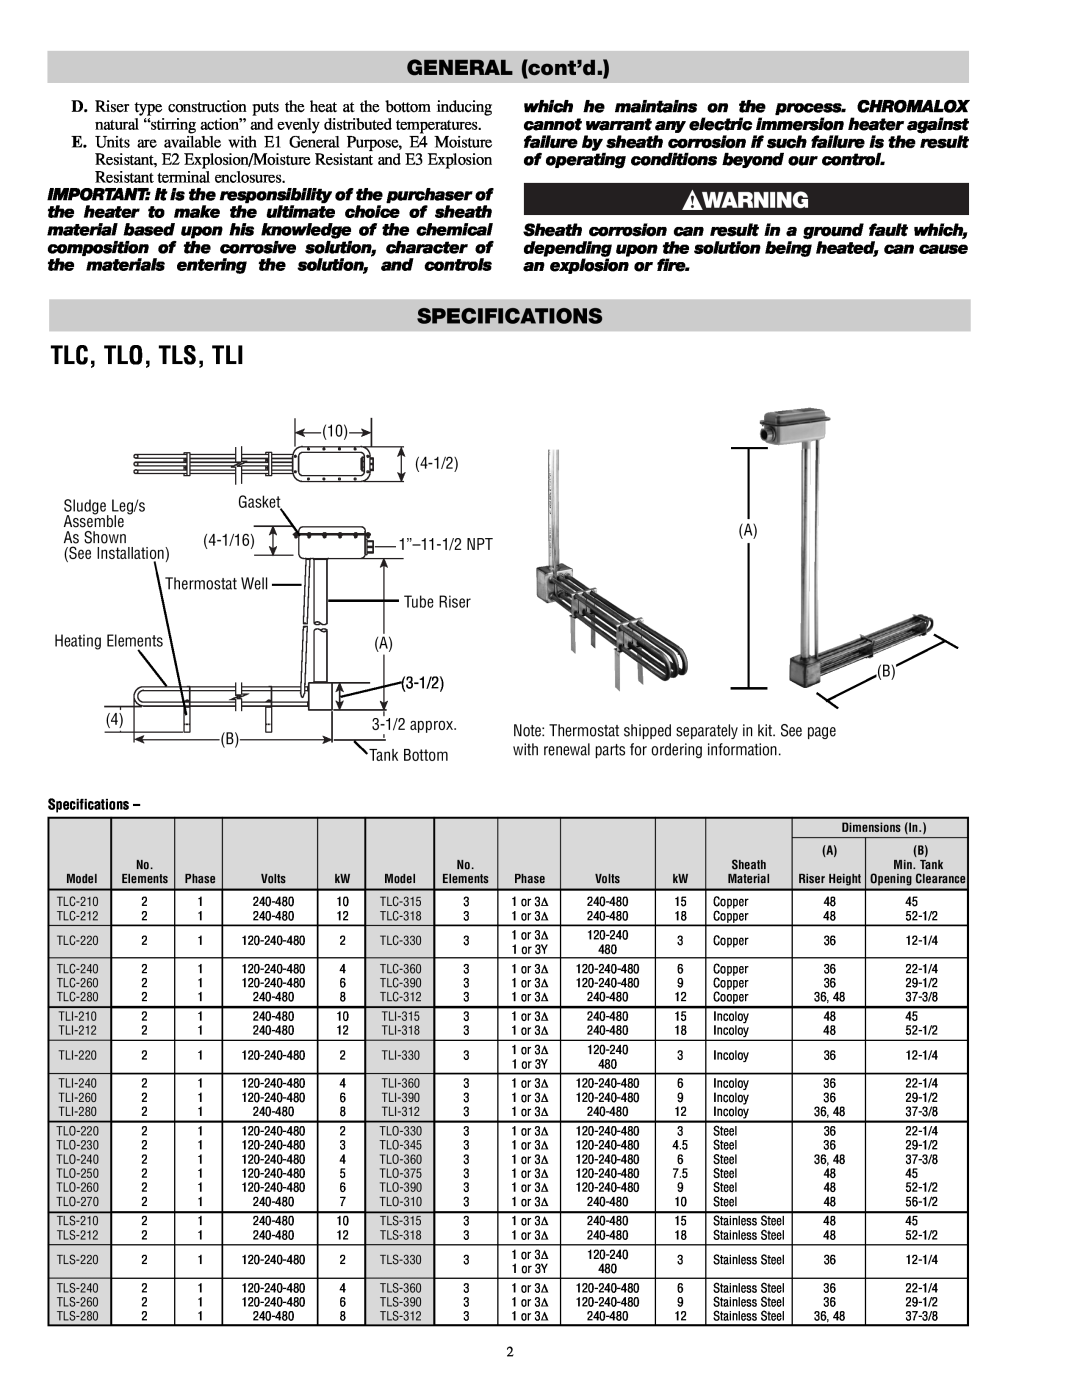 Chromalox PD411-10 installation instructions Tlc, Tlo, Tls, Tli, GENERAL cont’d, Specifications 